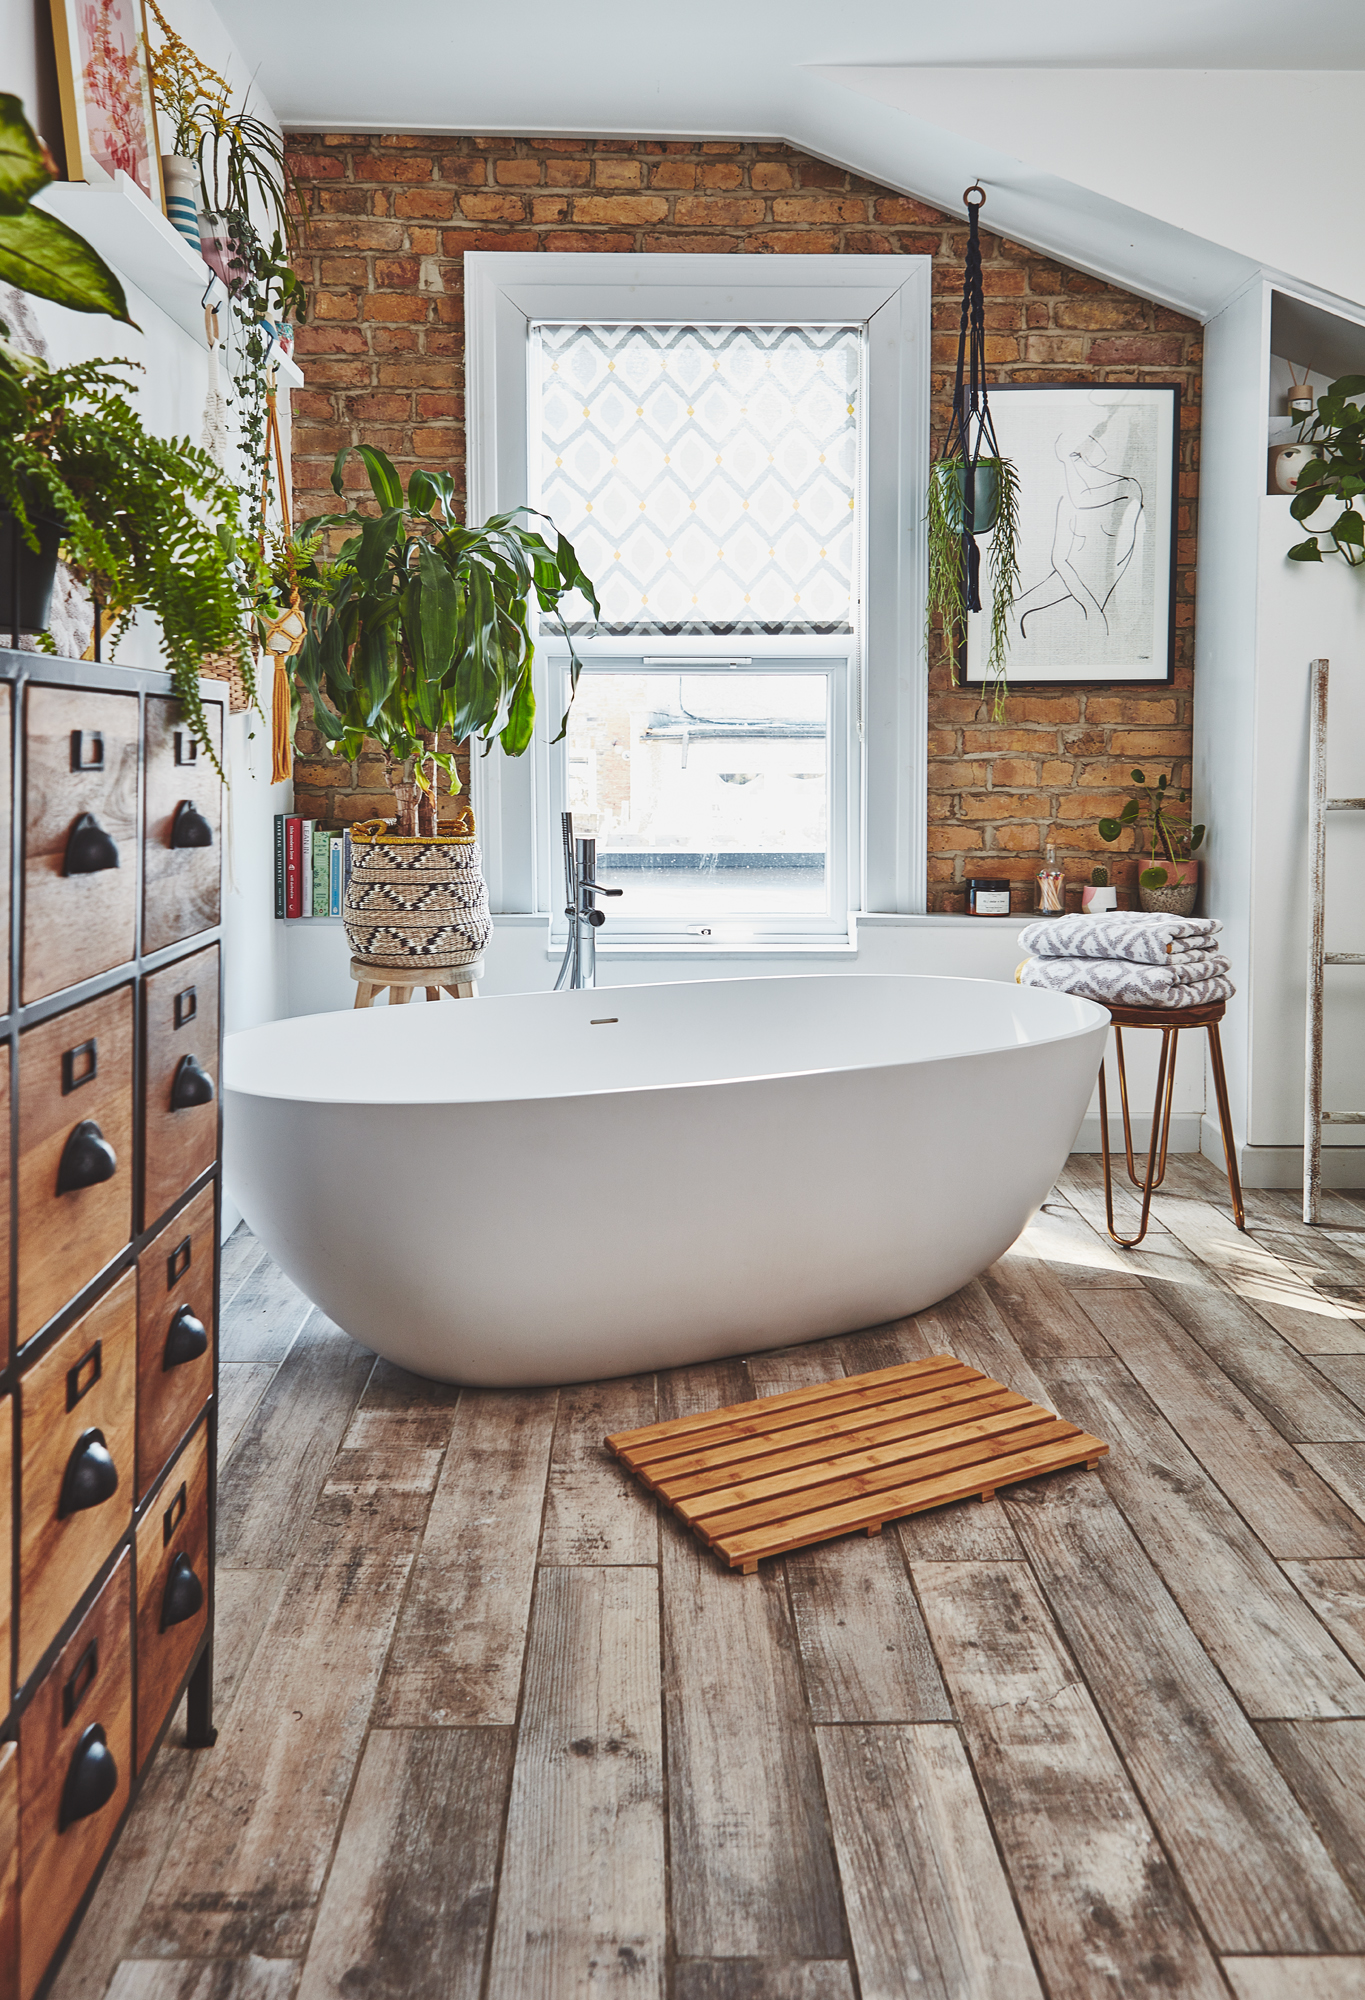 Rustic Bathroom Ideas 10 Ways To, Bathtub Surround Ideas Wood